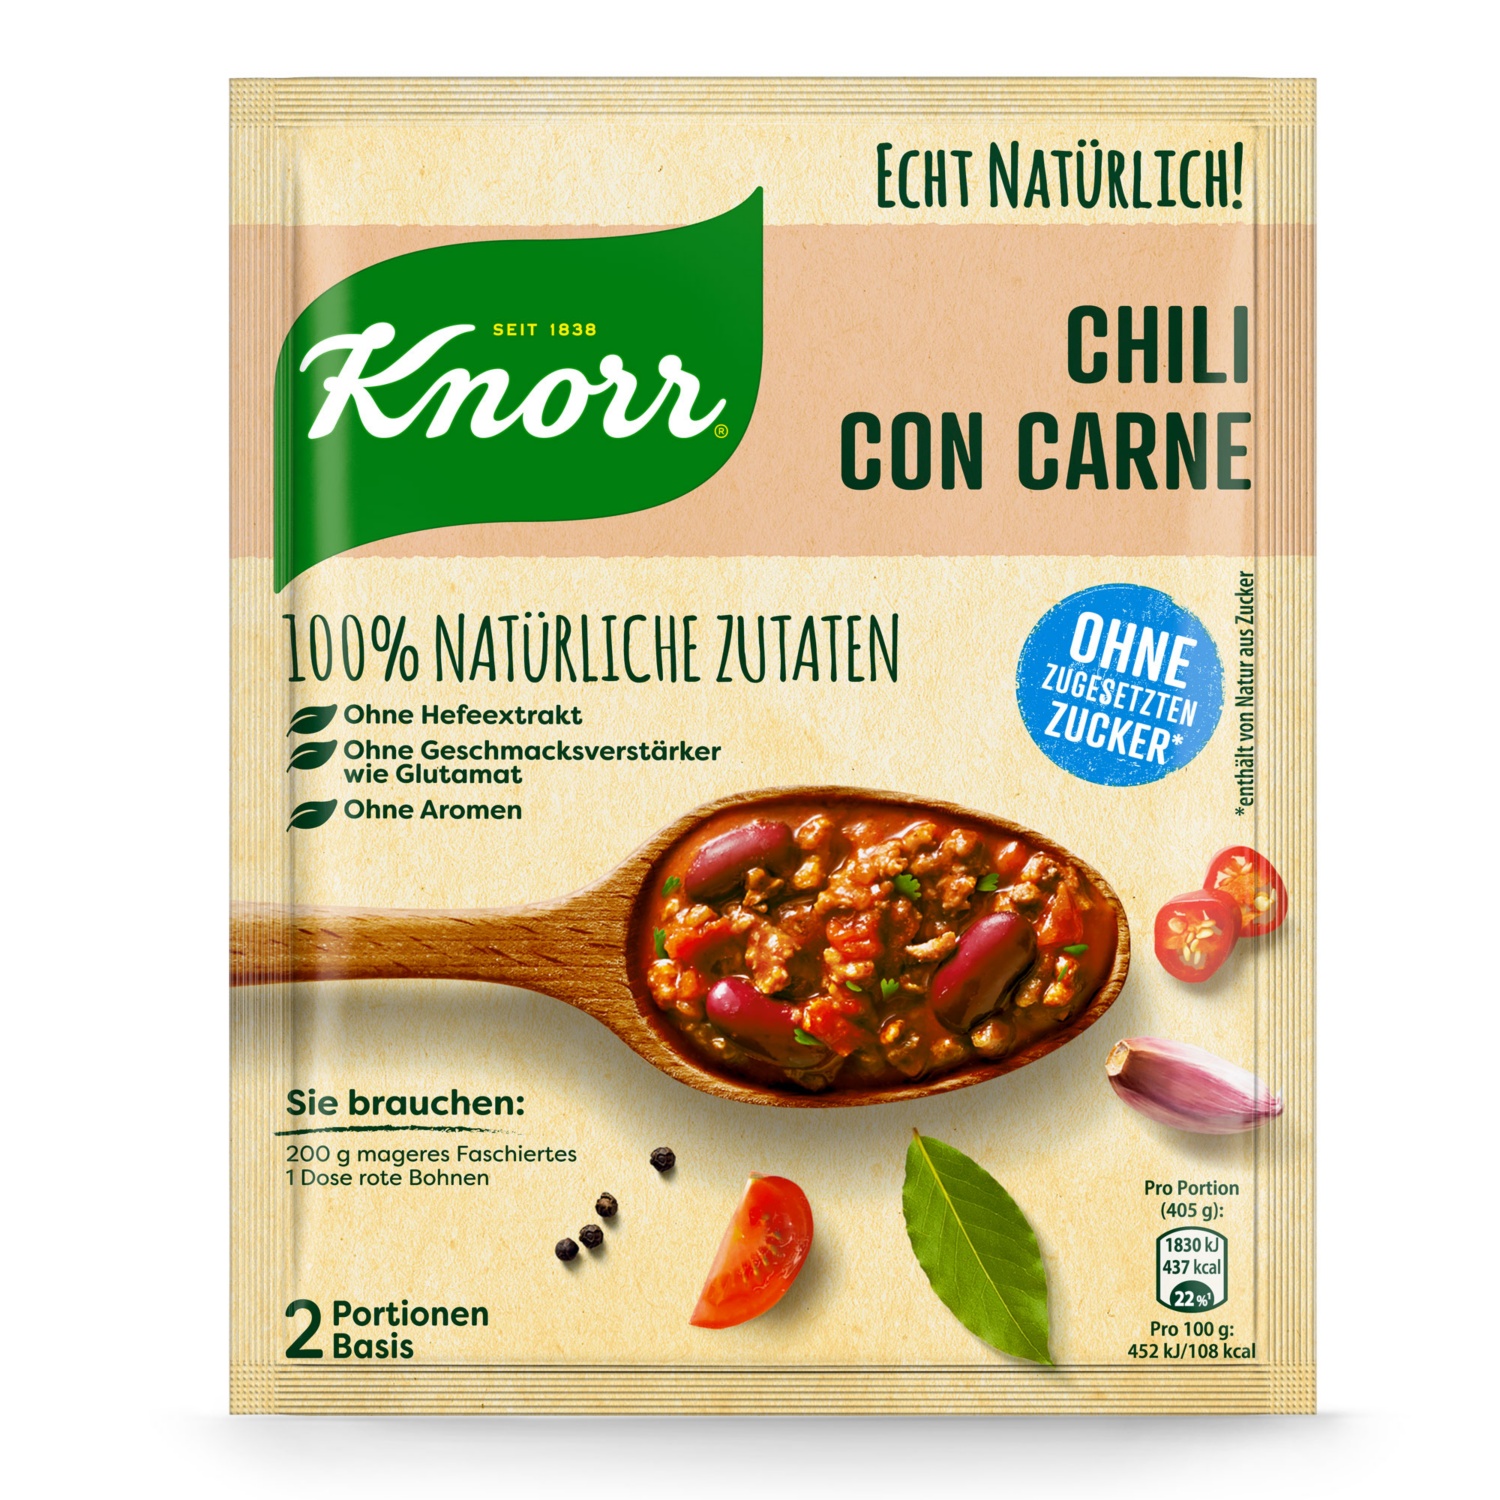 KNORR Basis „Echt Natürlich“, Chili con Carne